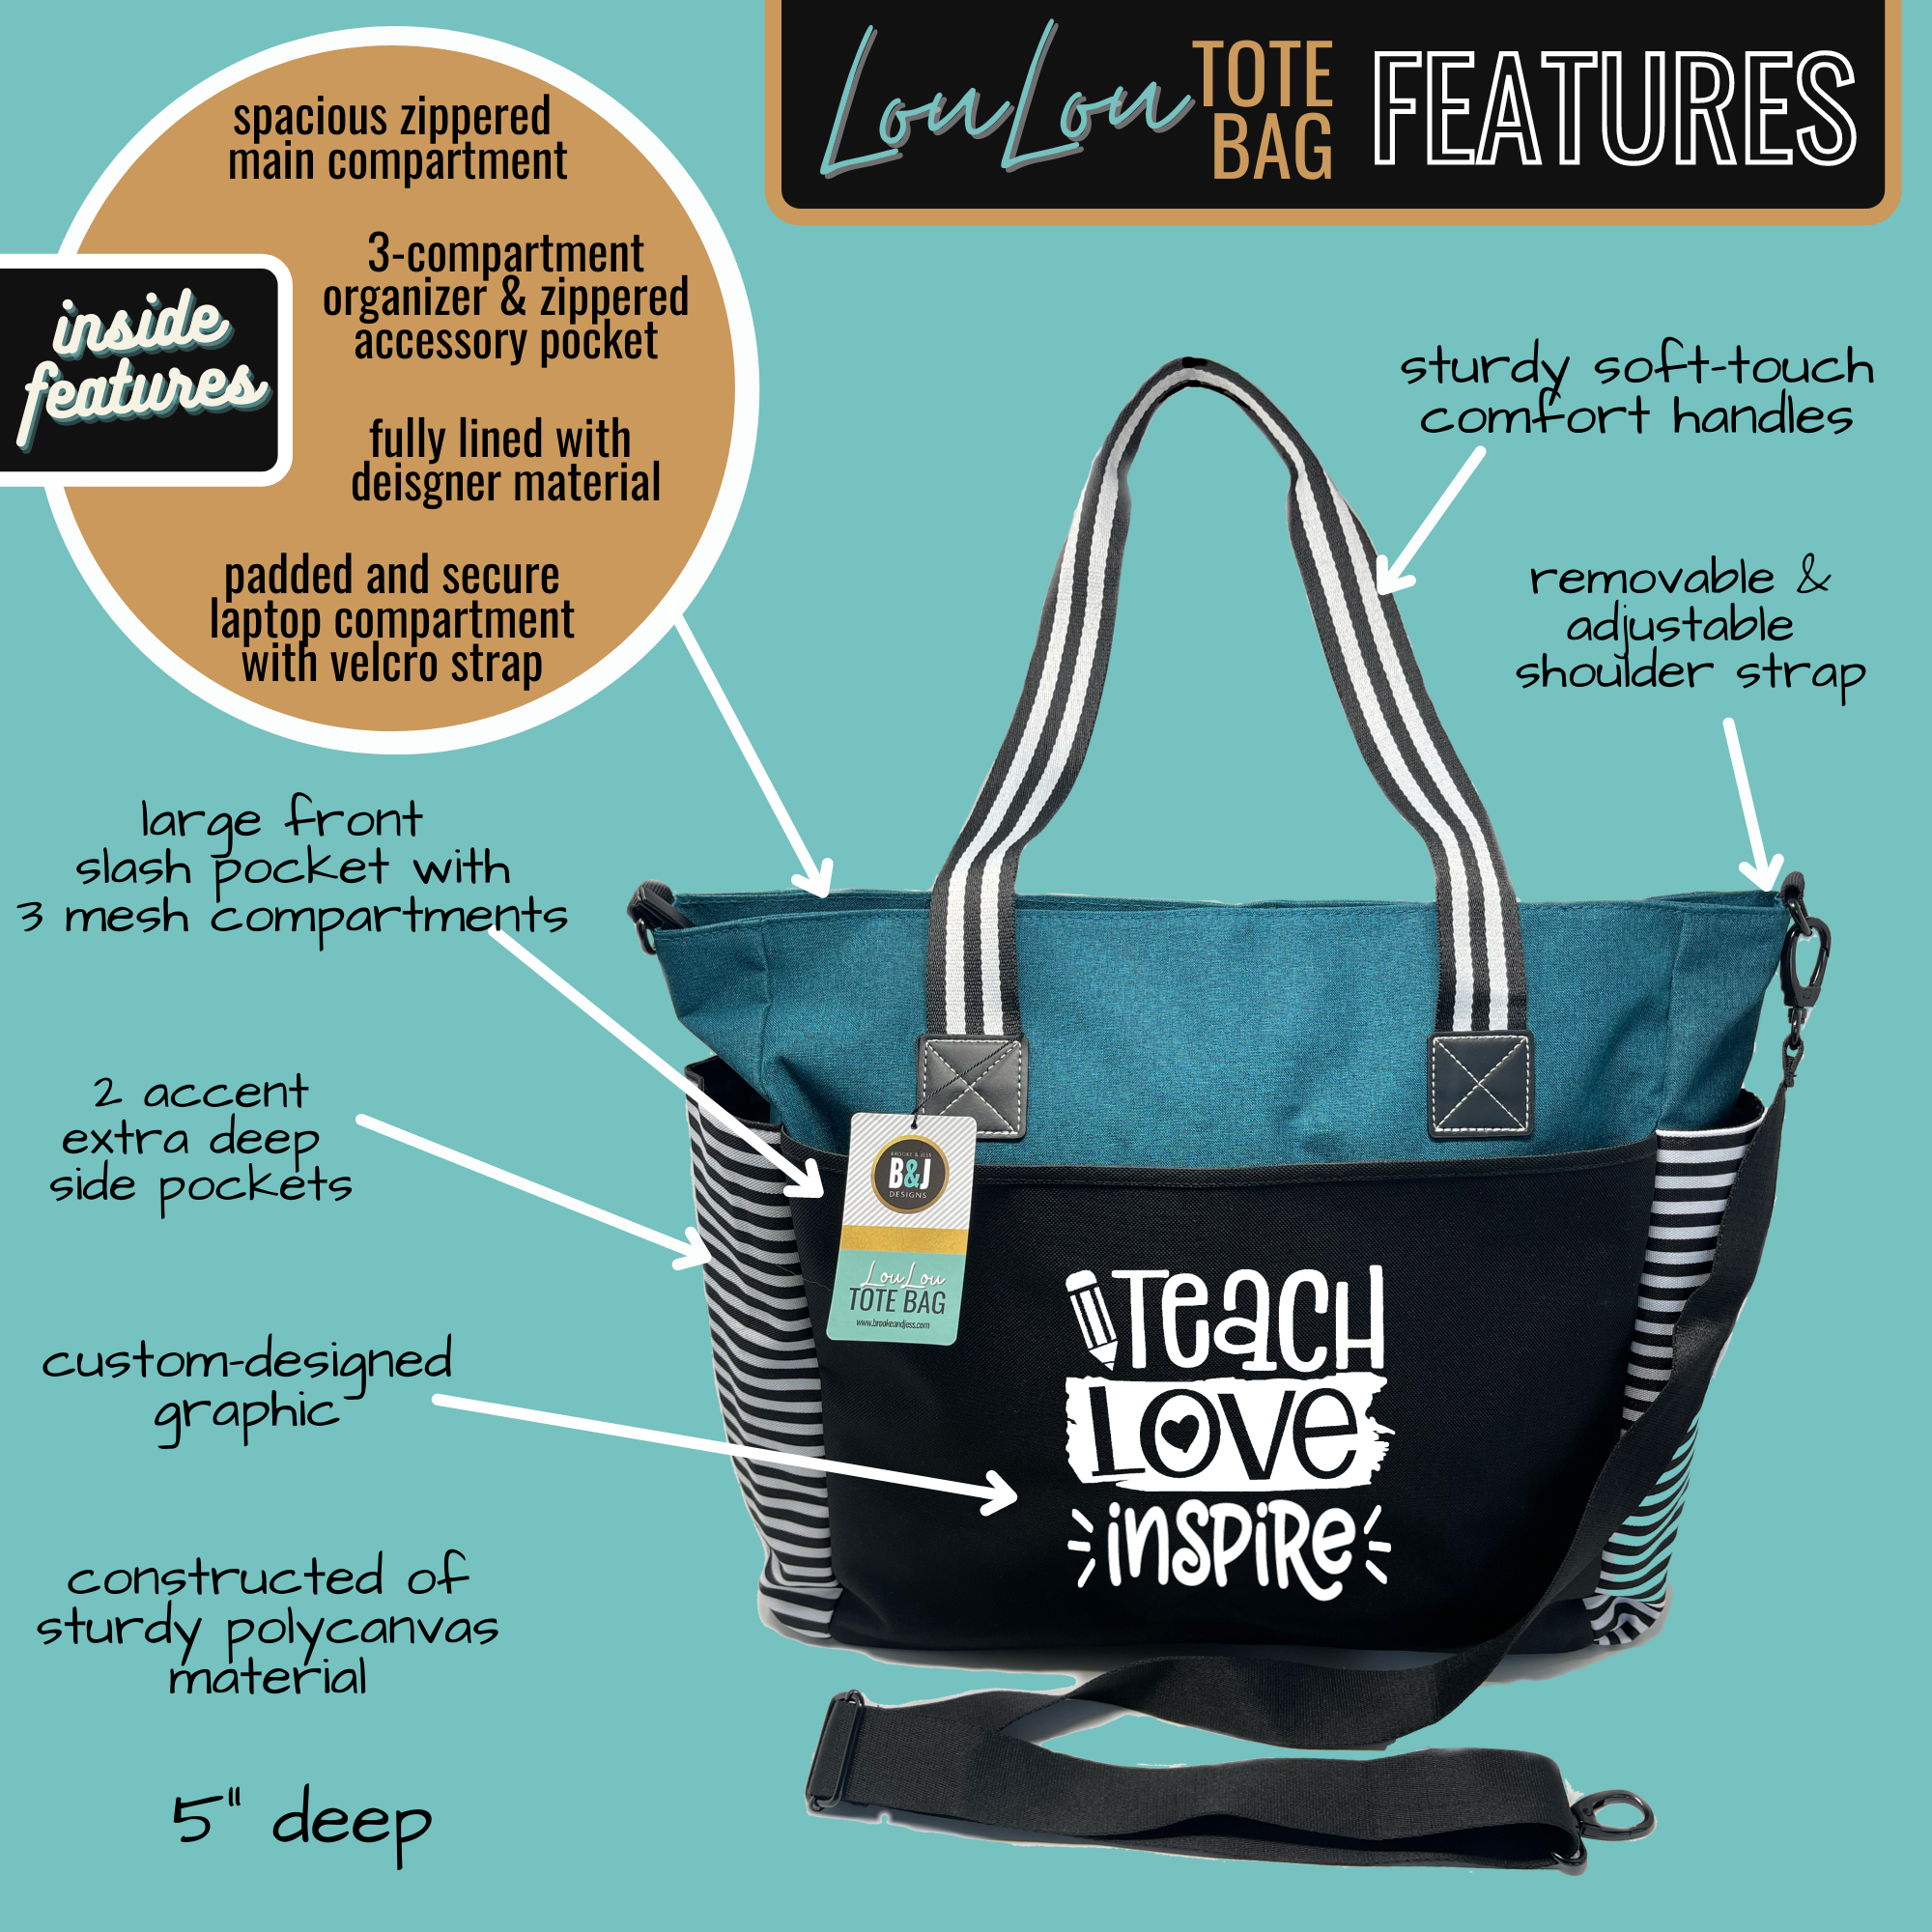 Cute Teacher Tote Bag for School - lovetrendify